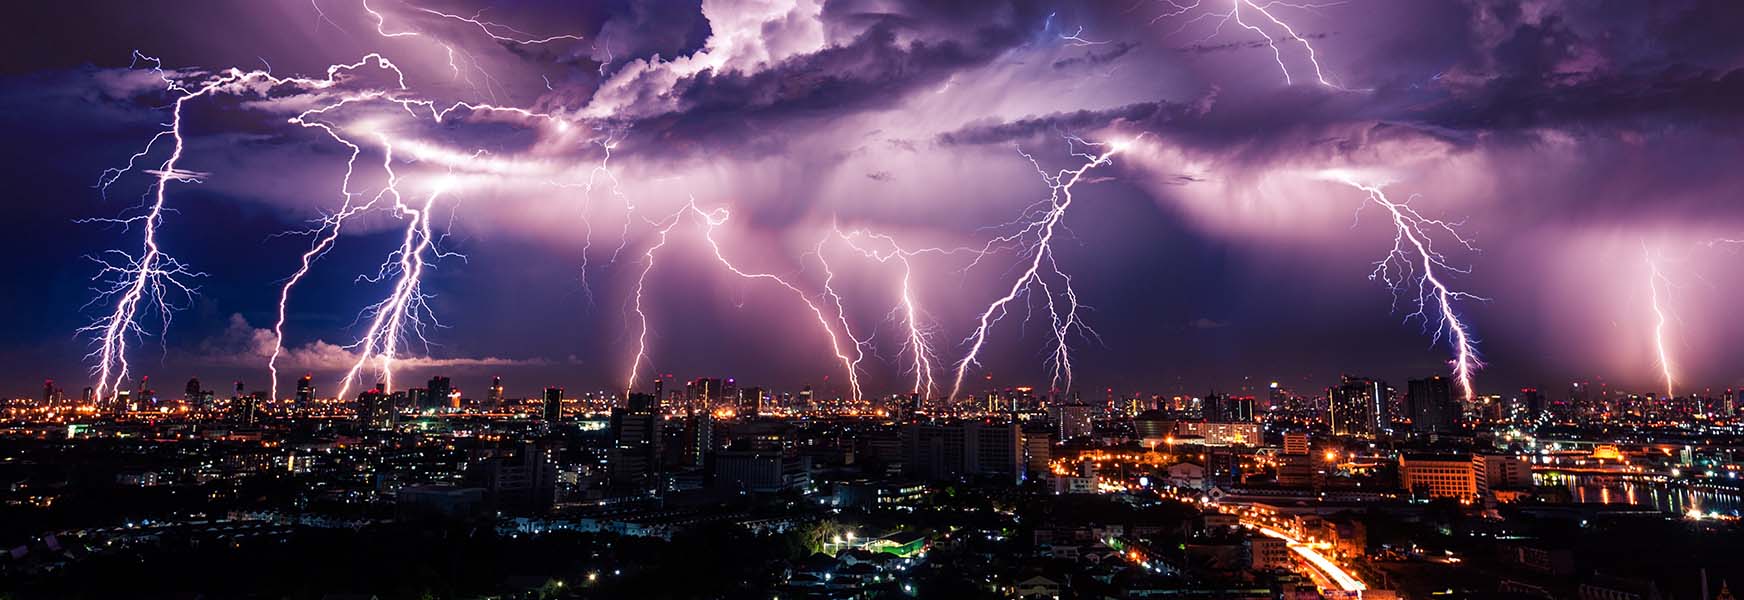 Night time lightning strikes over a big city